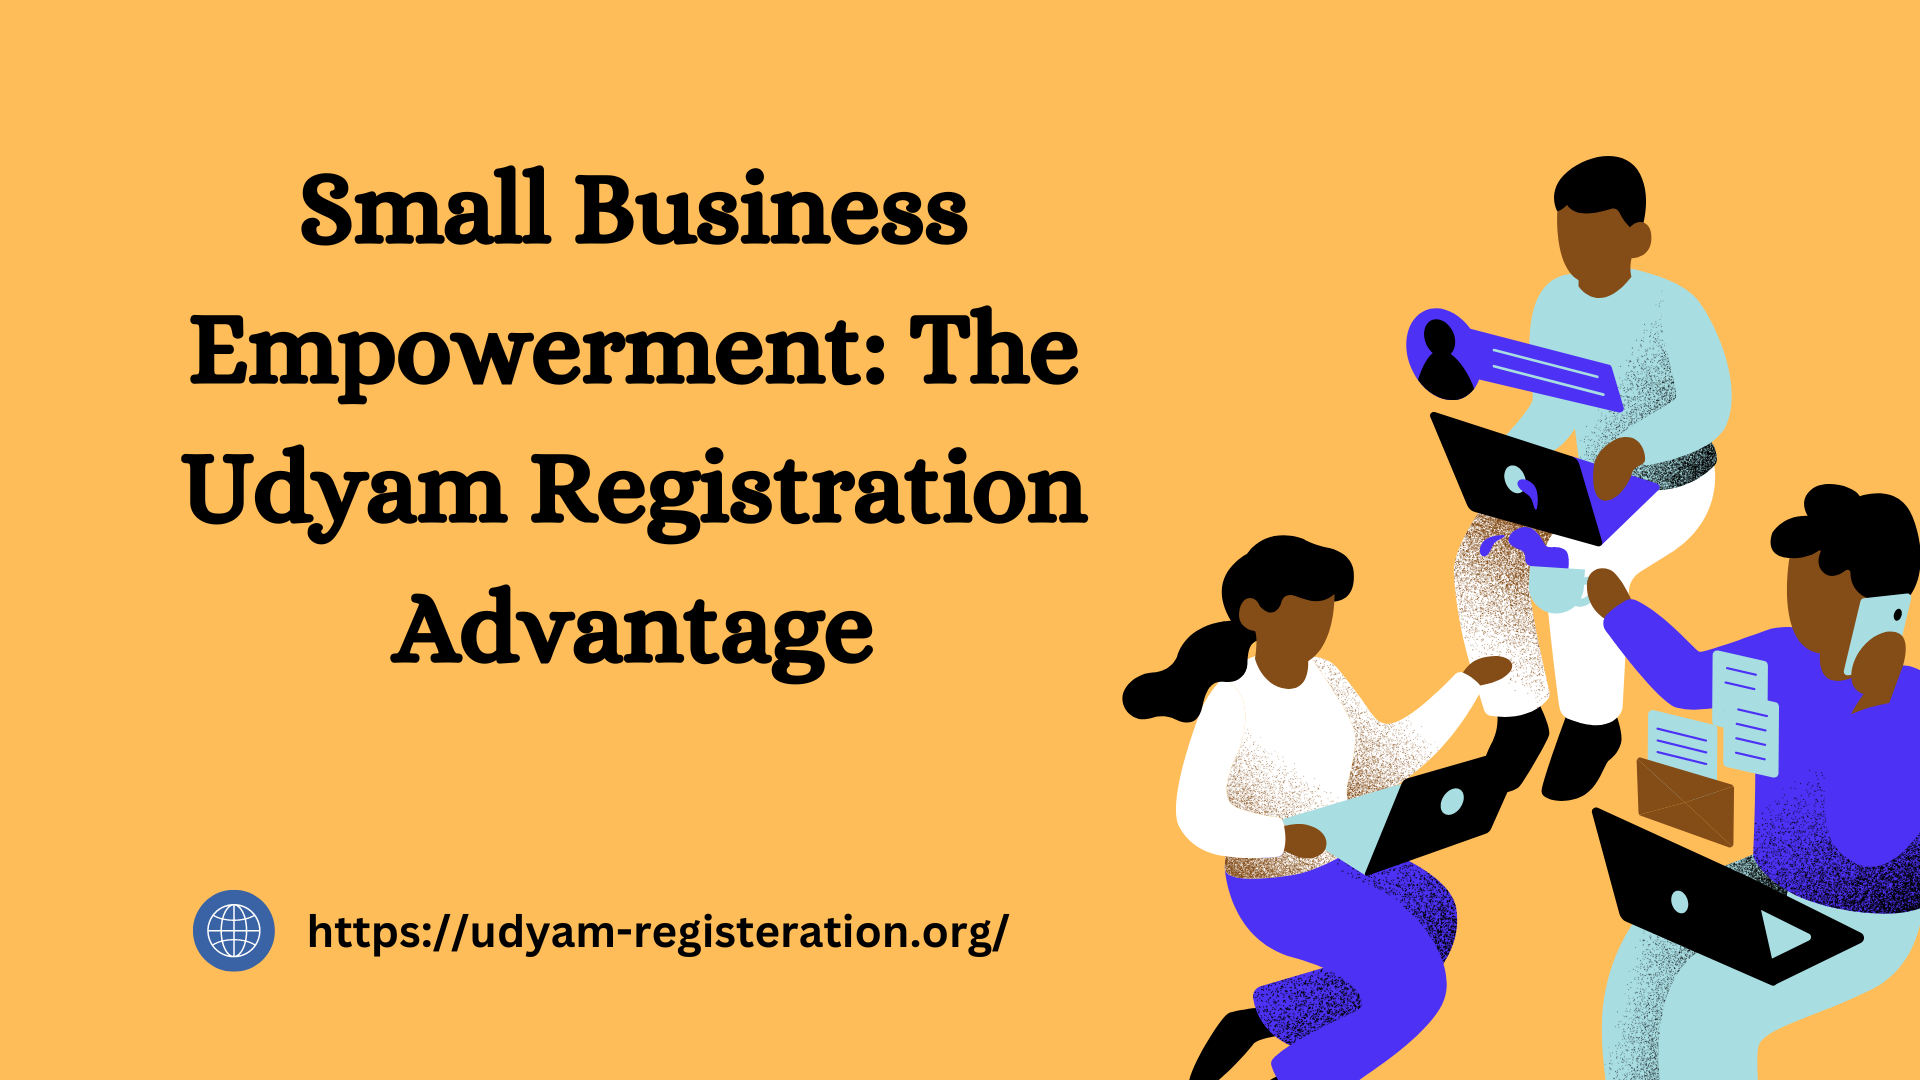 Small Business Empowerment: The Udyam Registration Advantage